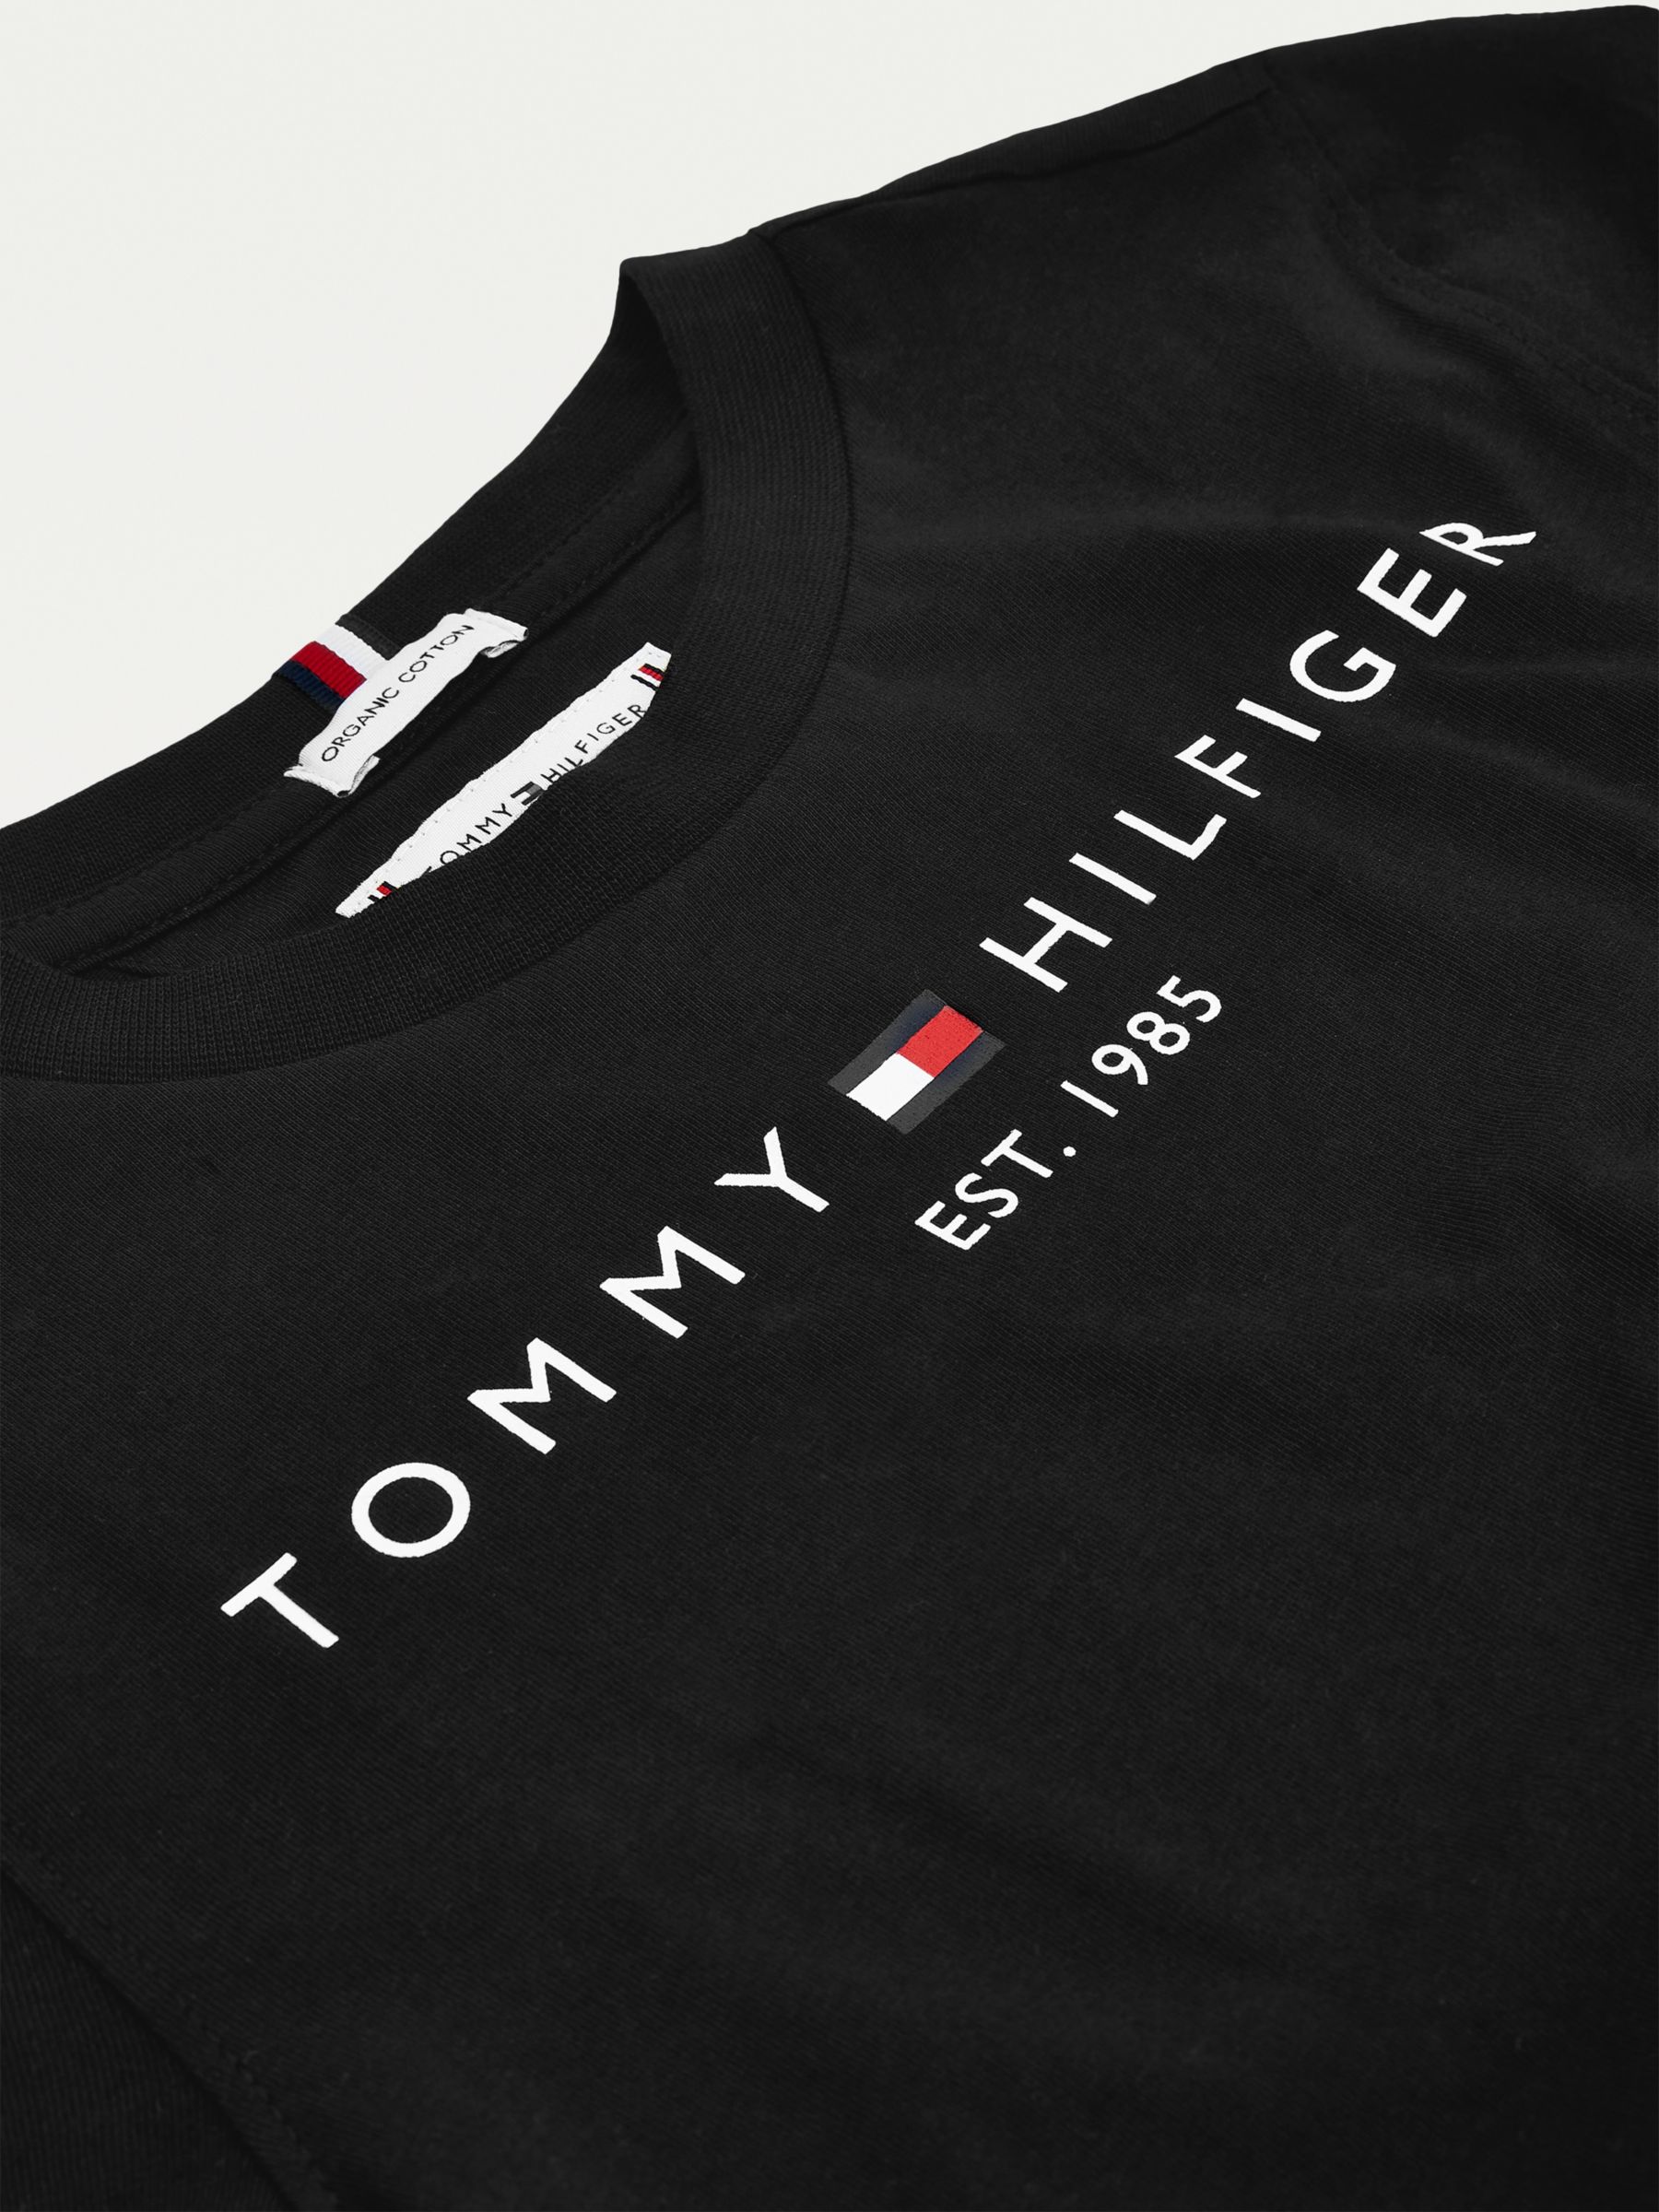 Buy Tommy Hilfiger Kids' Essential Organic Cotton Logo Tee Online at johnlewis.com